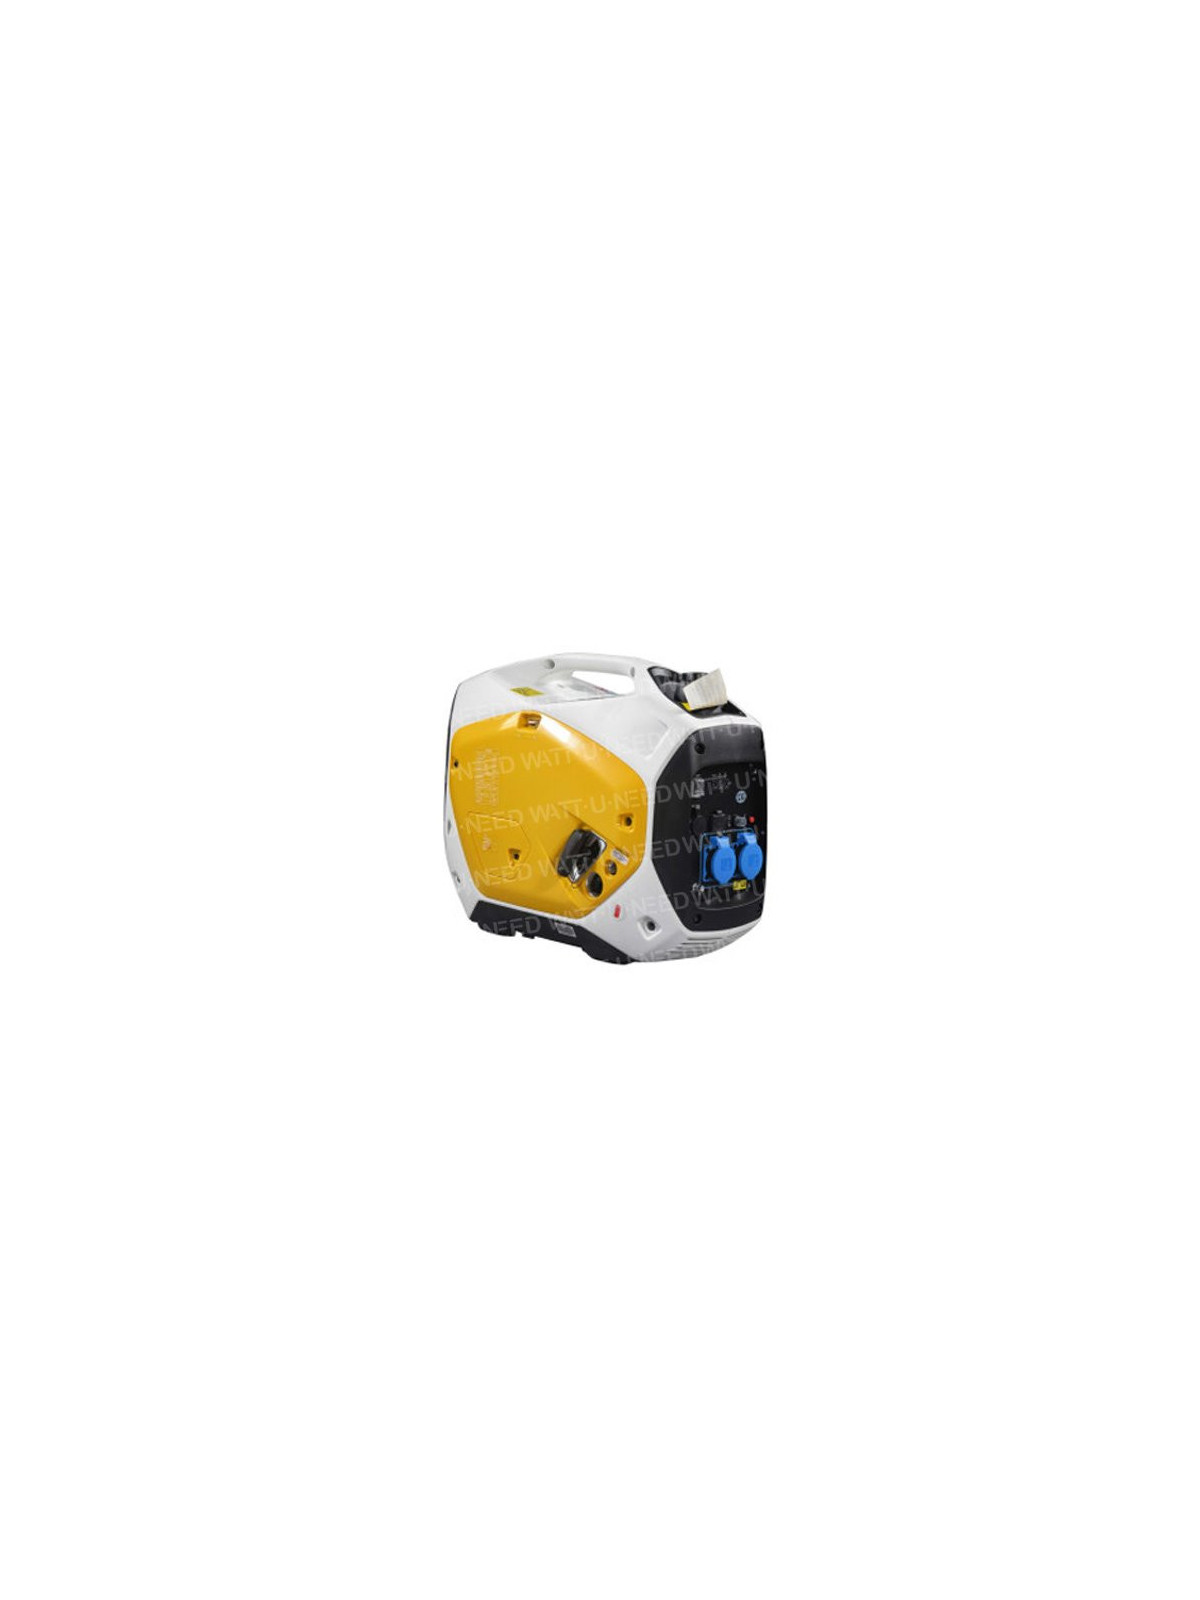 Generator Kompak 2200W Petrol 230V soundproof GG22i